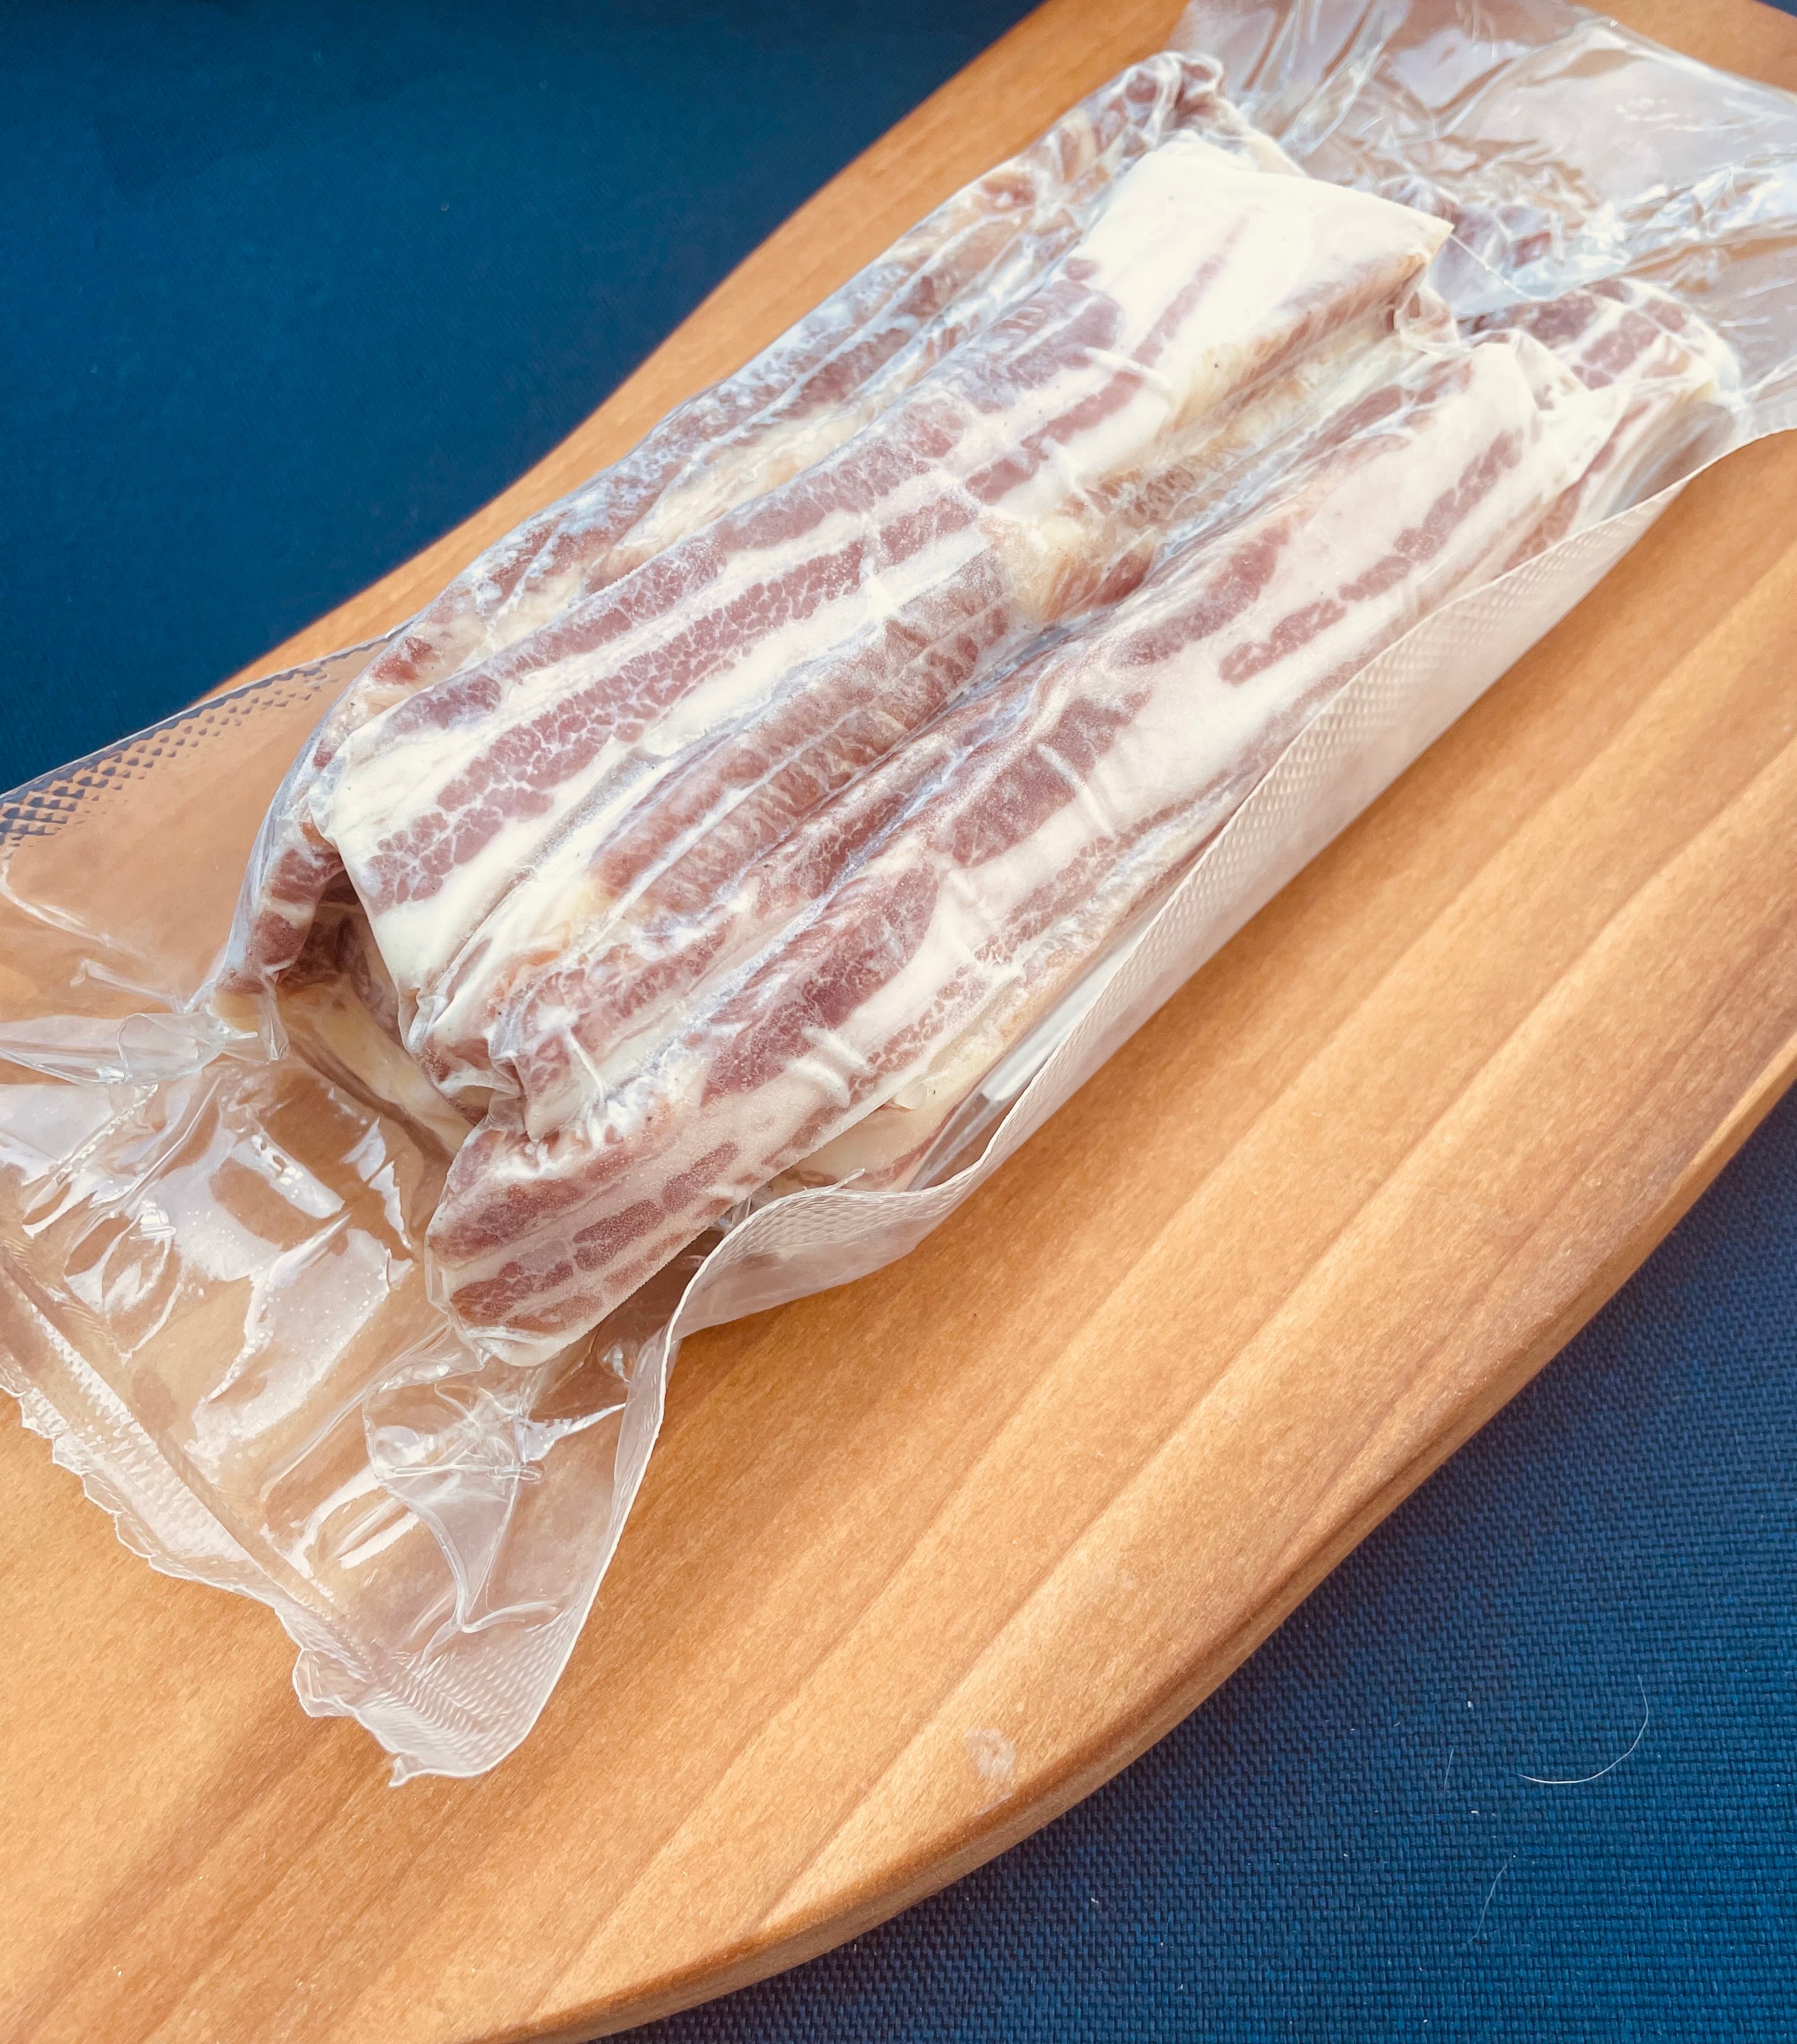  wulikanhua 2 Pack Plastic Bacon Box, Deli Meat Saver